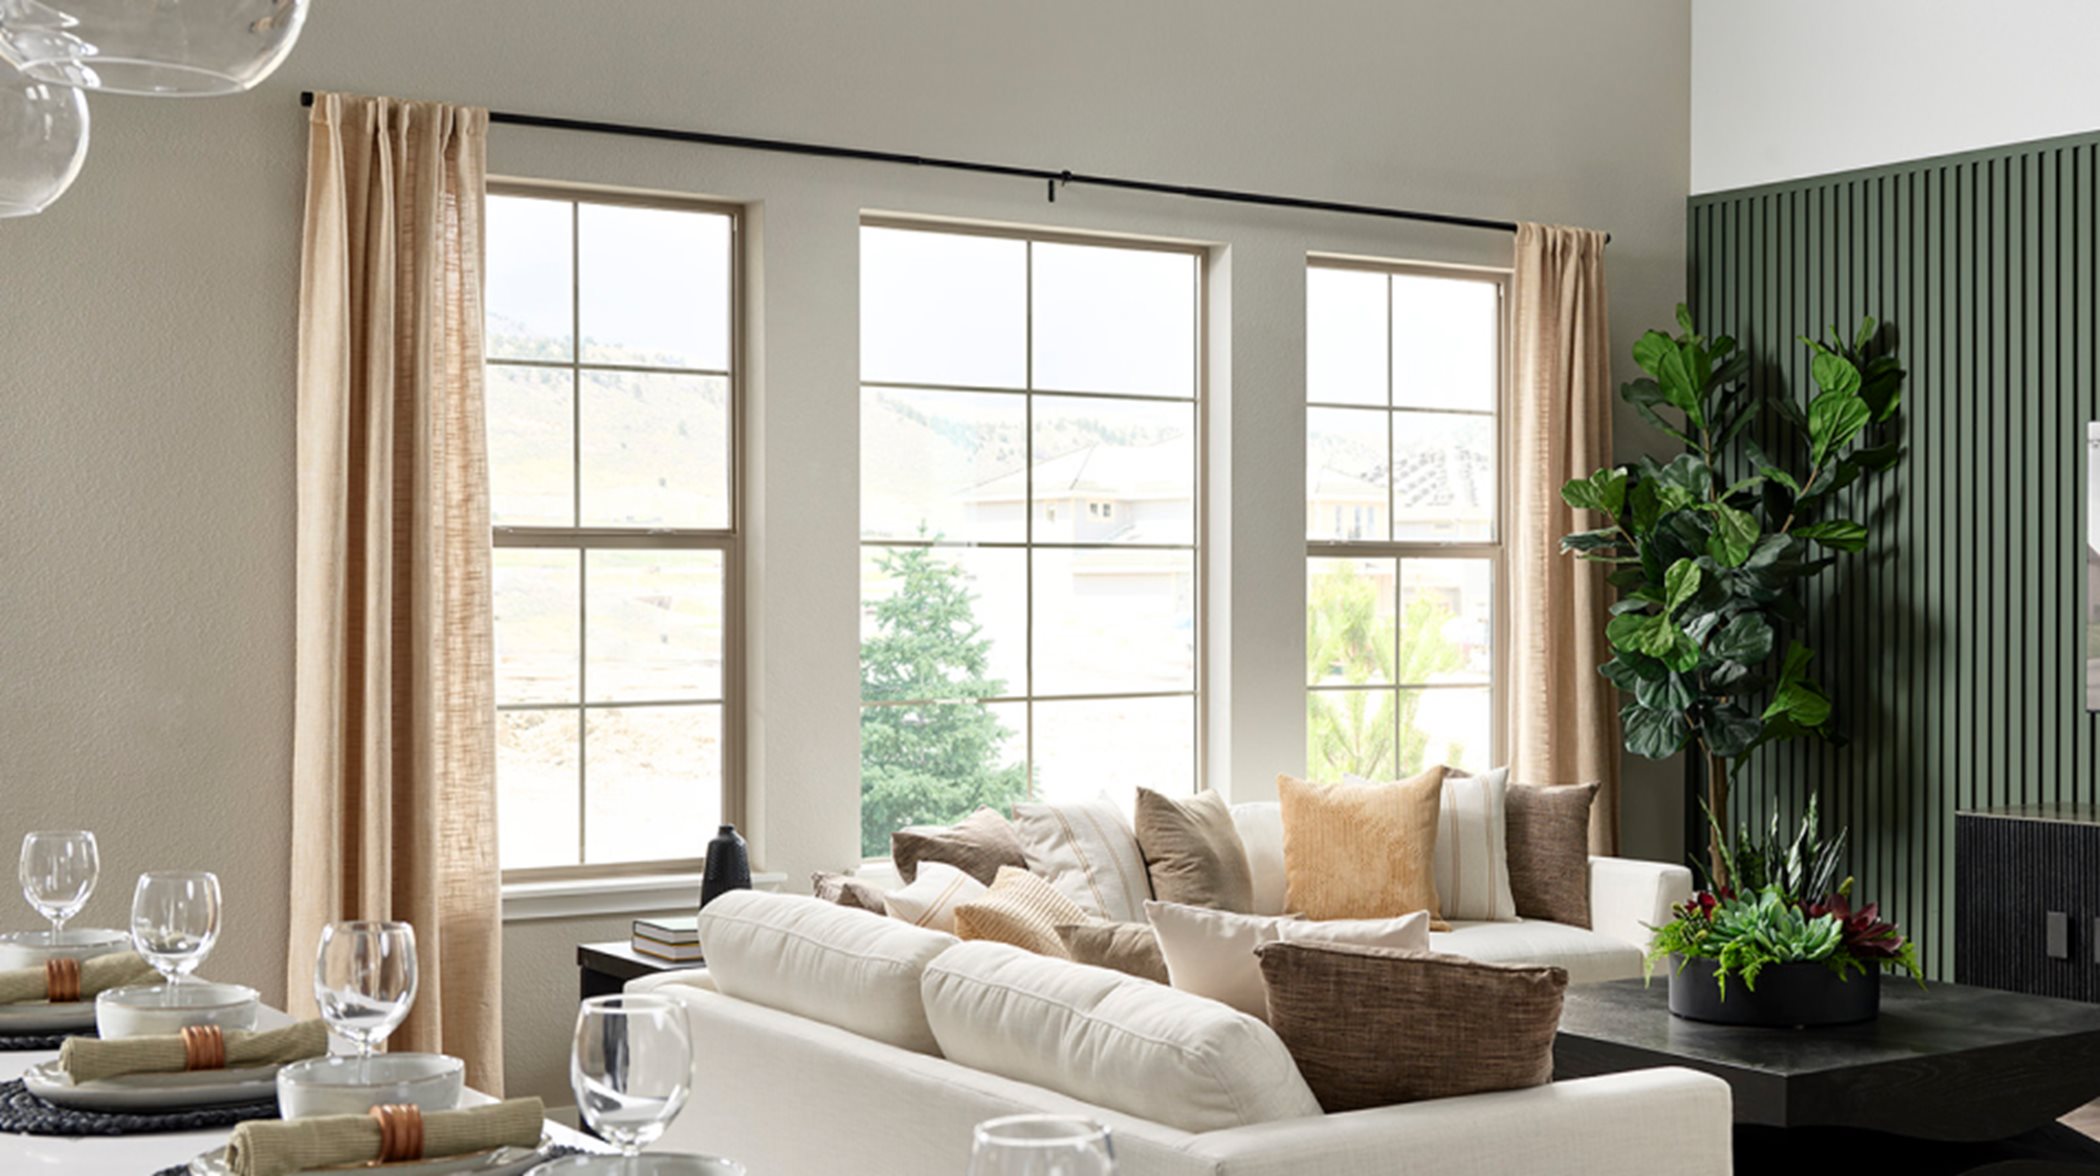 Dual-glazes windows with high performance low-E glass